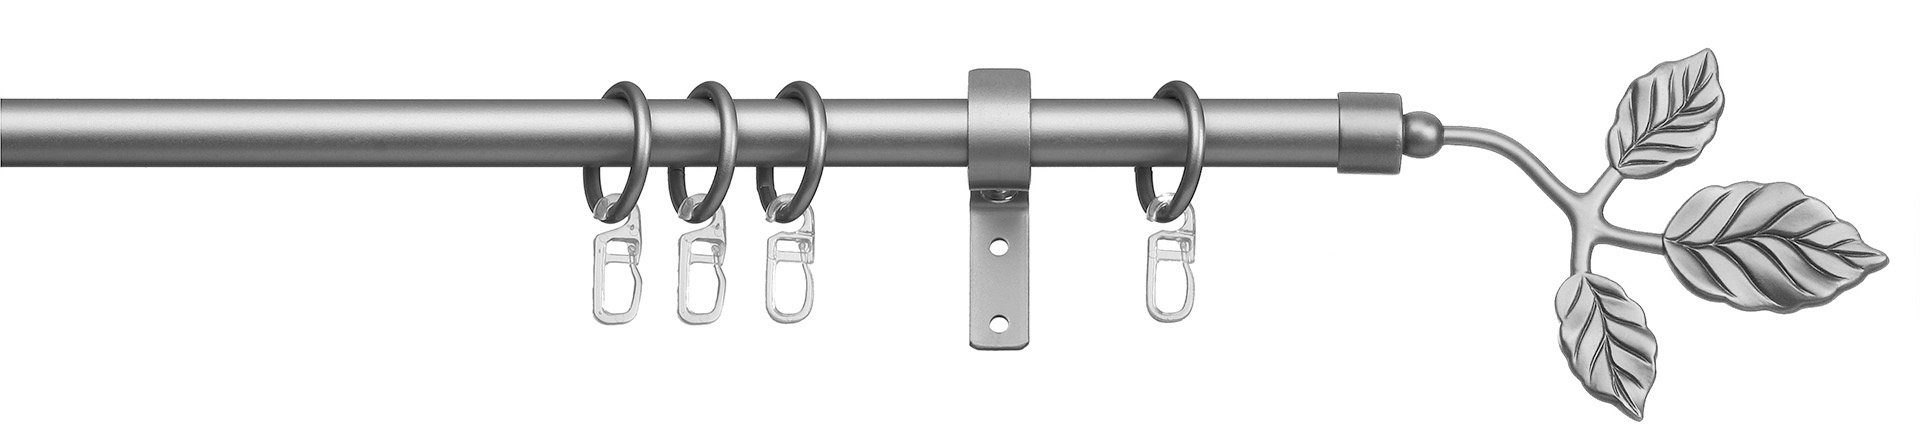 Gardinenstange Toskana, indeko, Ø 16 mm, 1-läufig, Fixmaß, verschraubt, Stahl, Komplett-Set inkl. Ringen und Montagematerial | Gardinenstangen